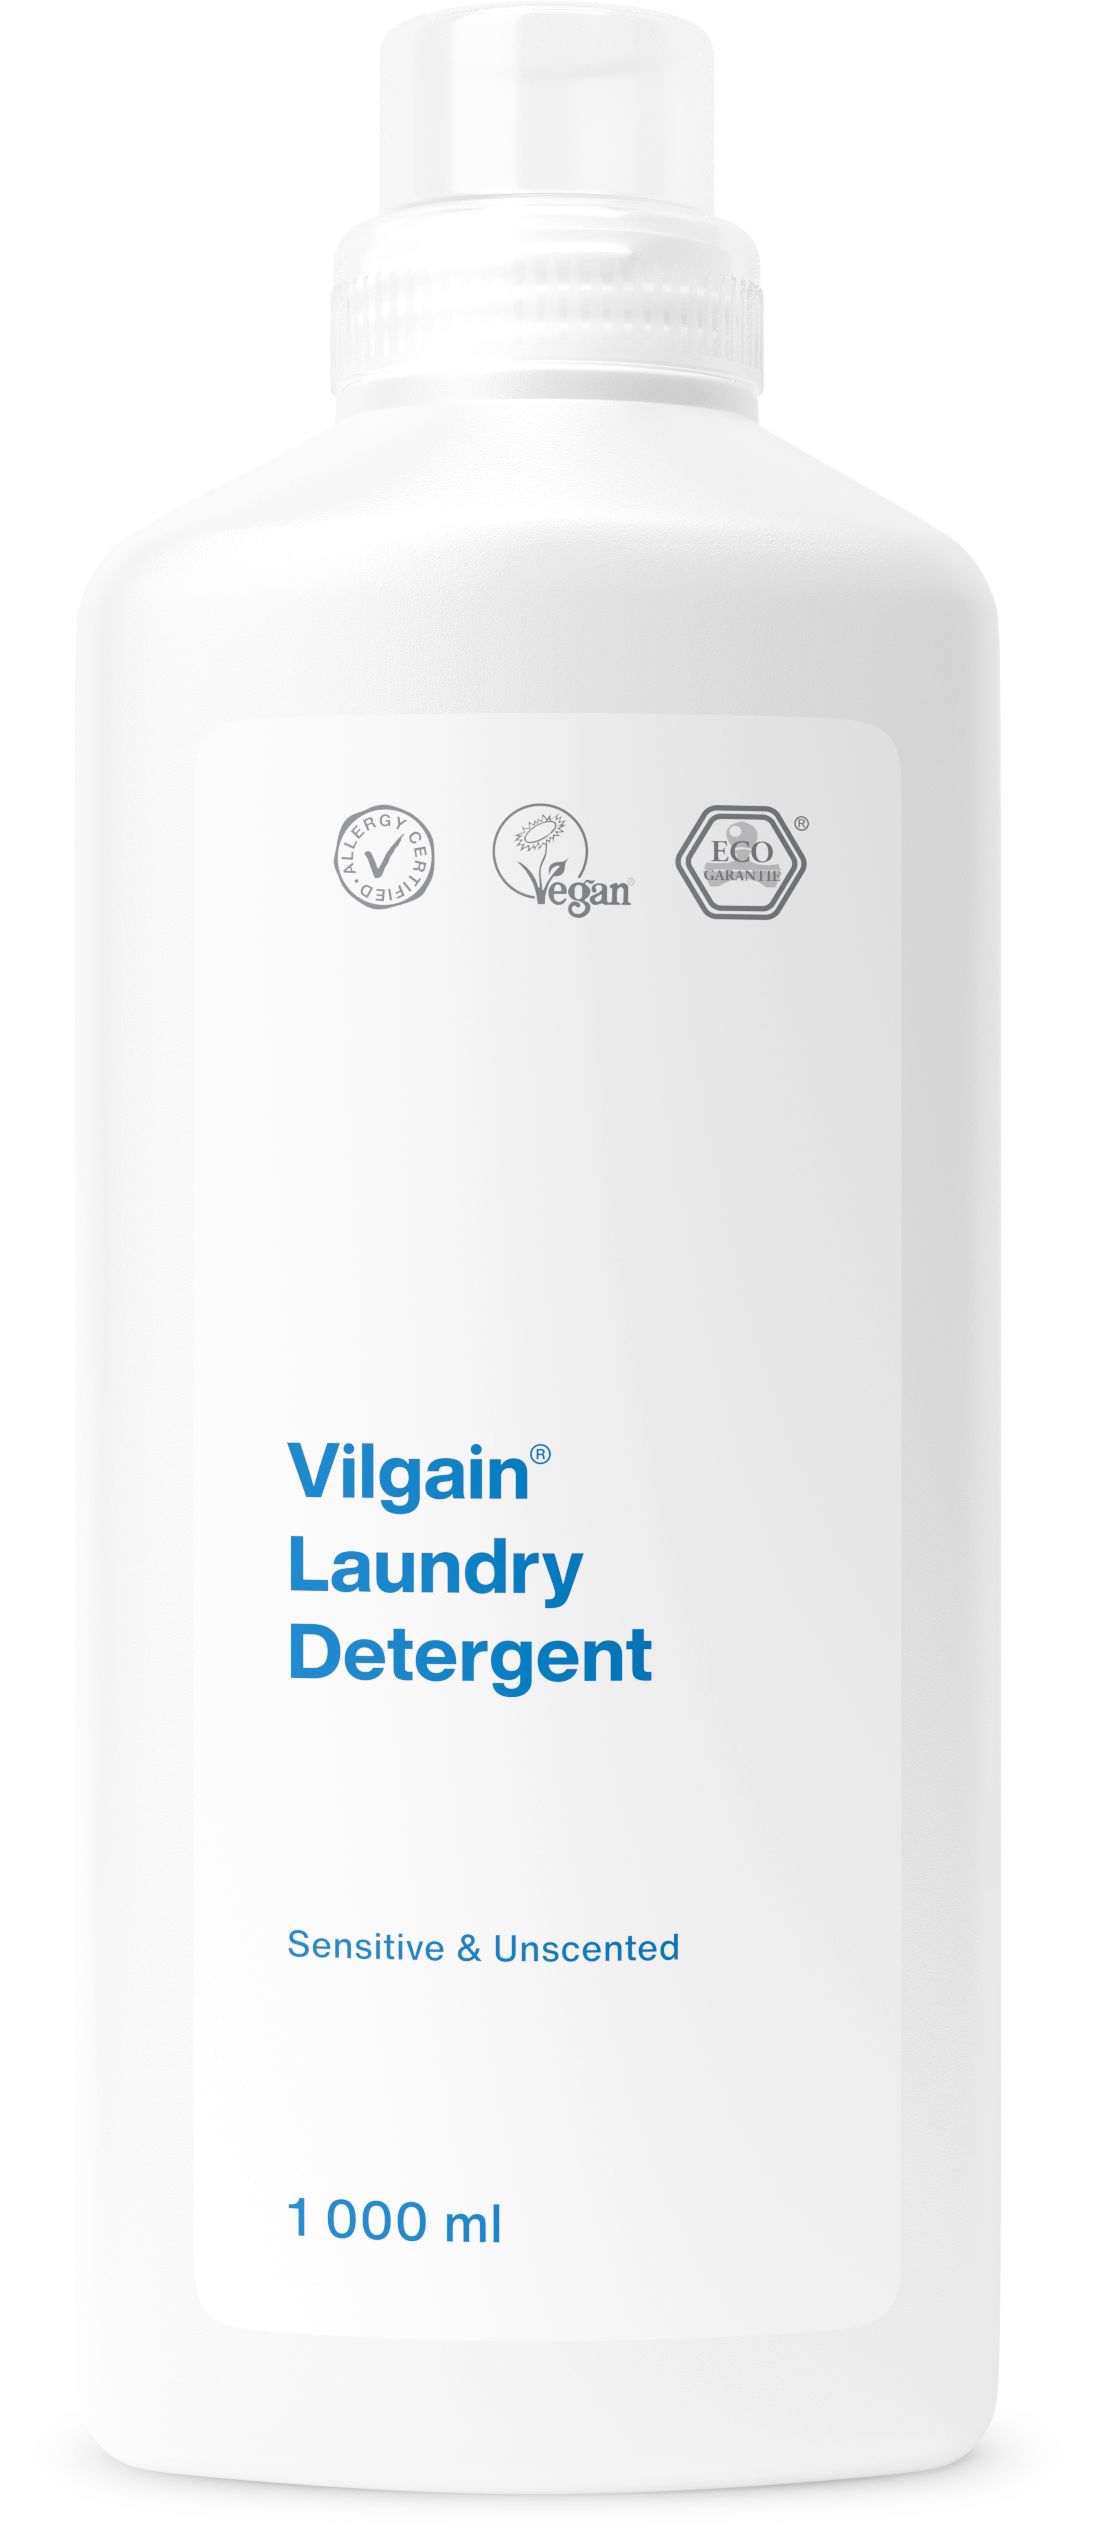 Vilgain Laundry Detergent